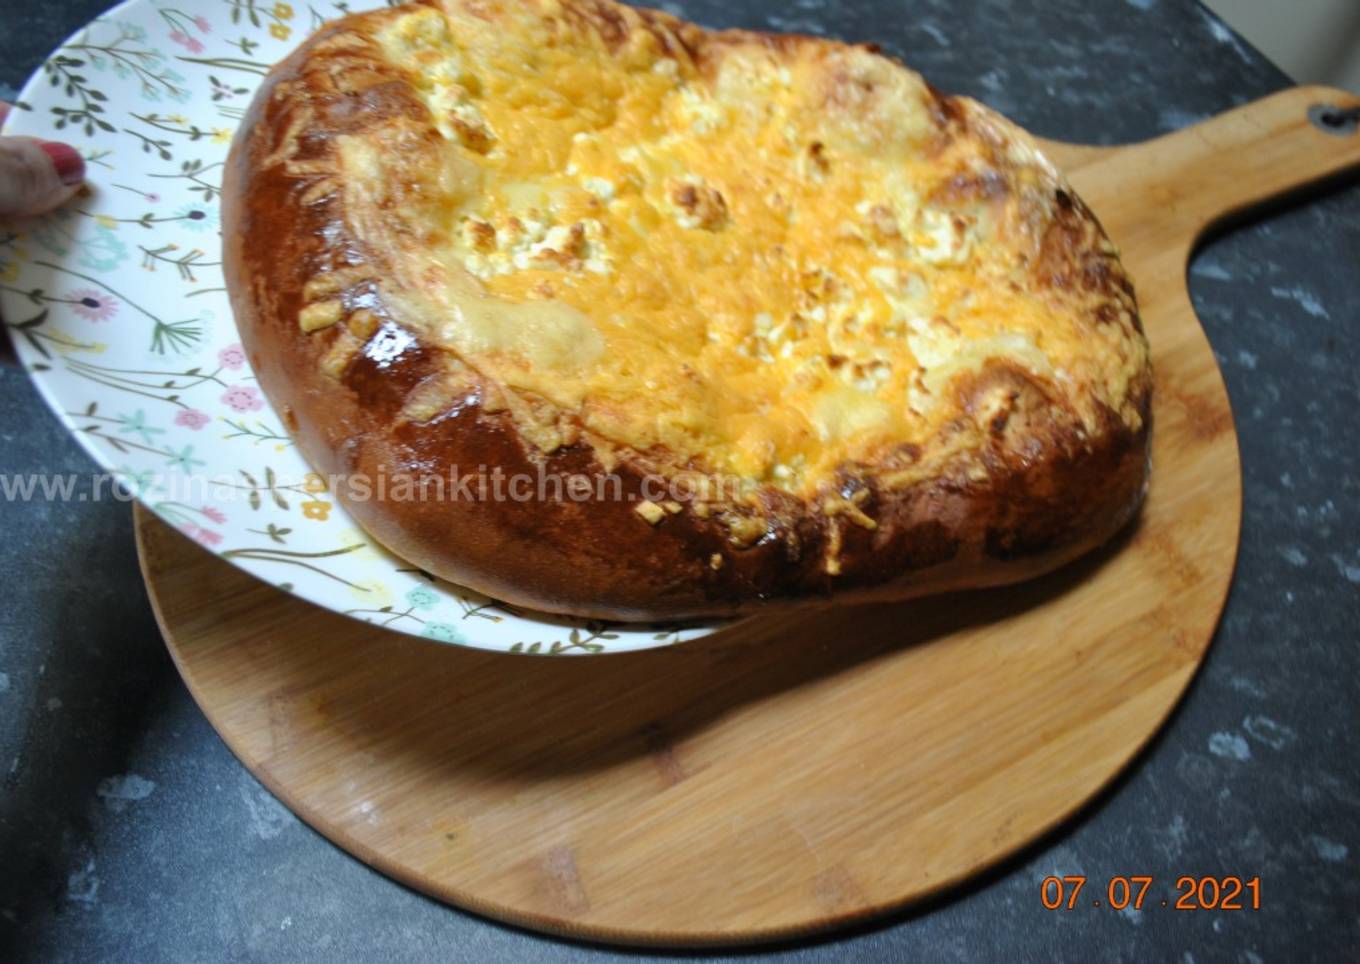 How to Make Easy Cheesy Bread Ù†Ø§Ù† Ù¾Ù†ÛŒØ±ÛŒ